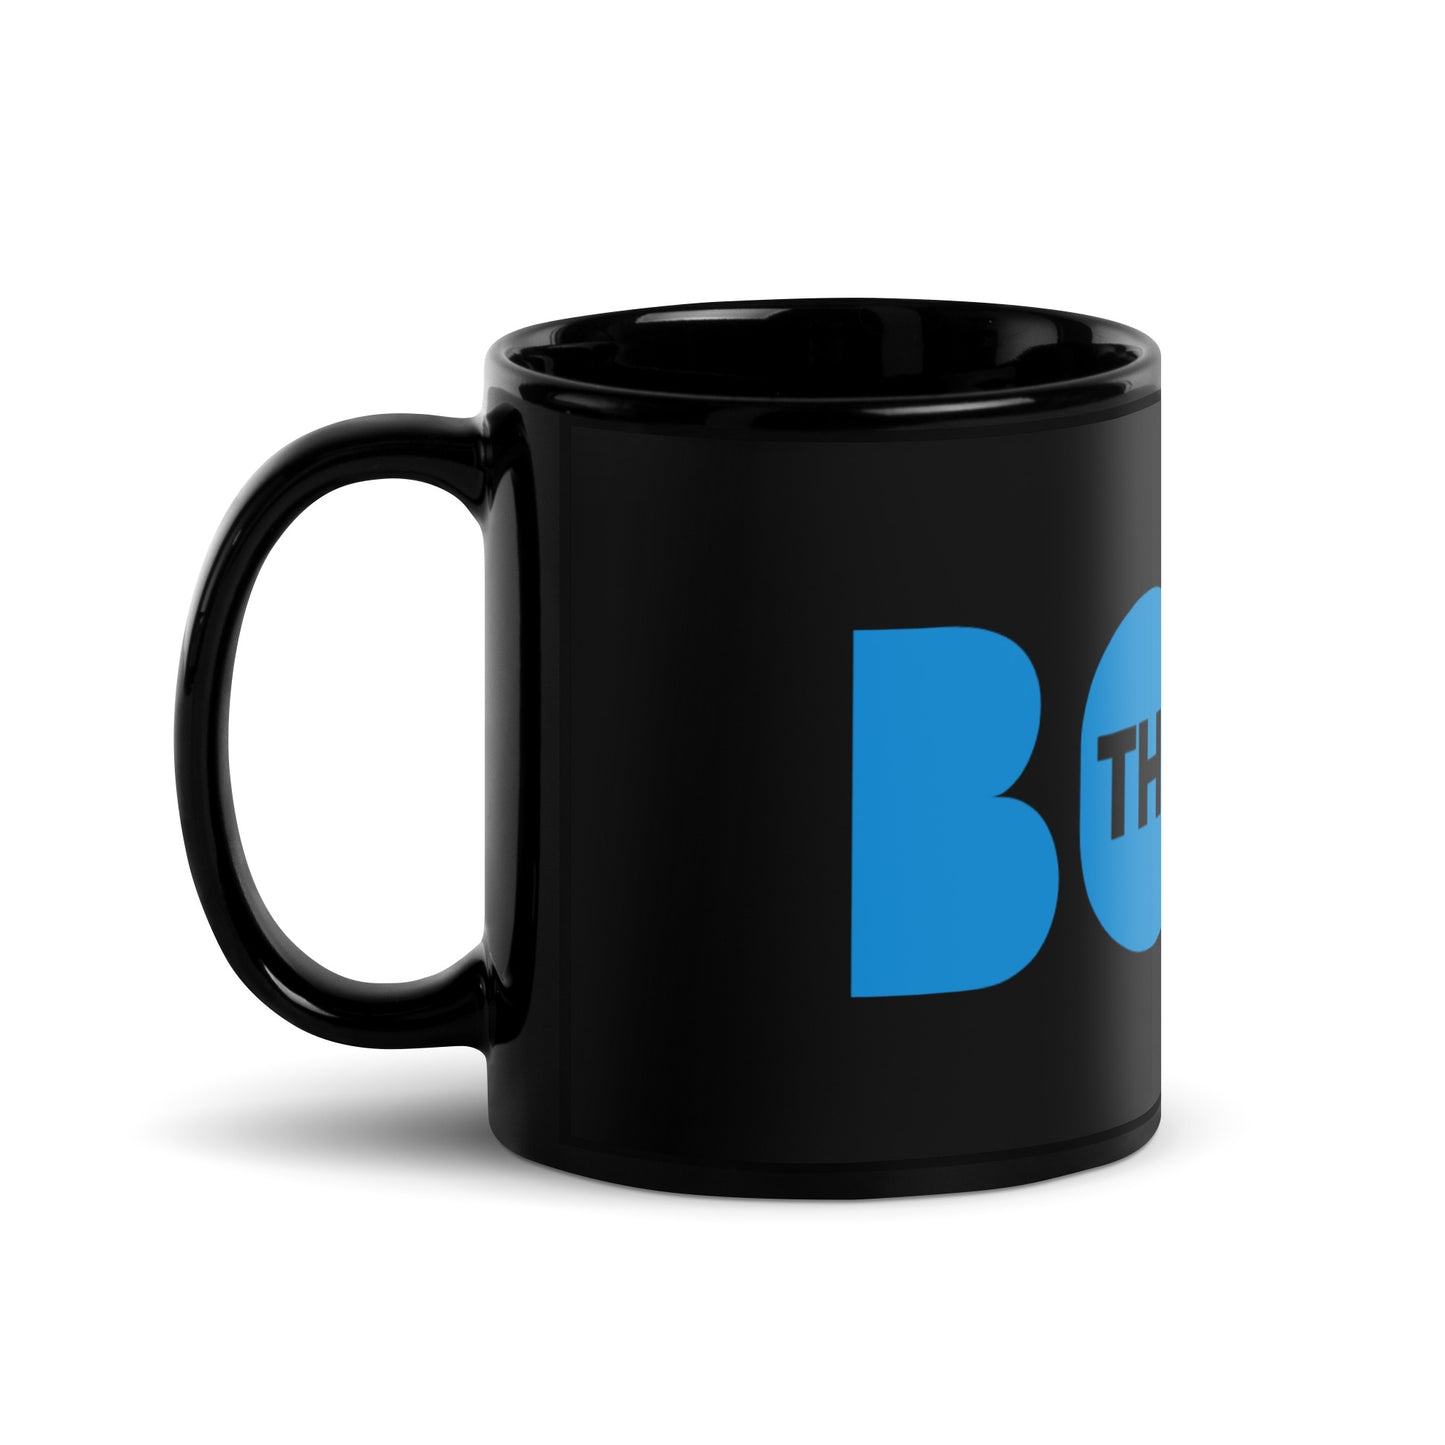 The Boss Mug | Black and Blue